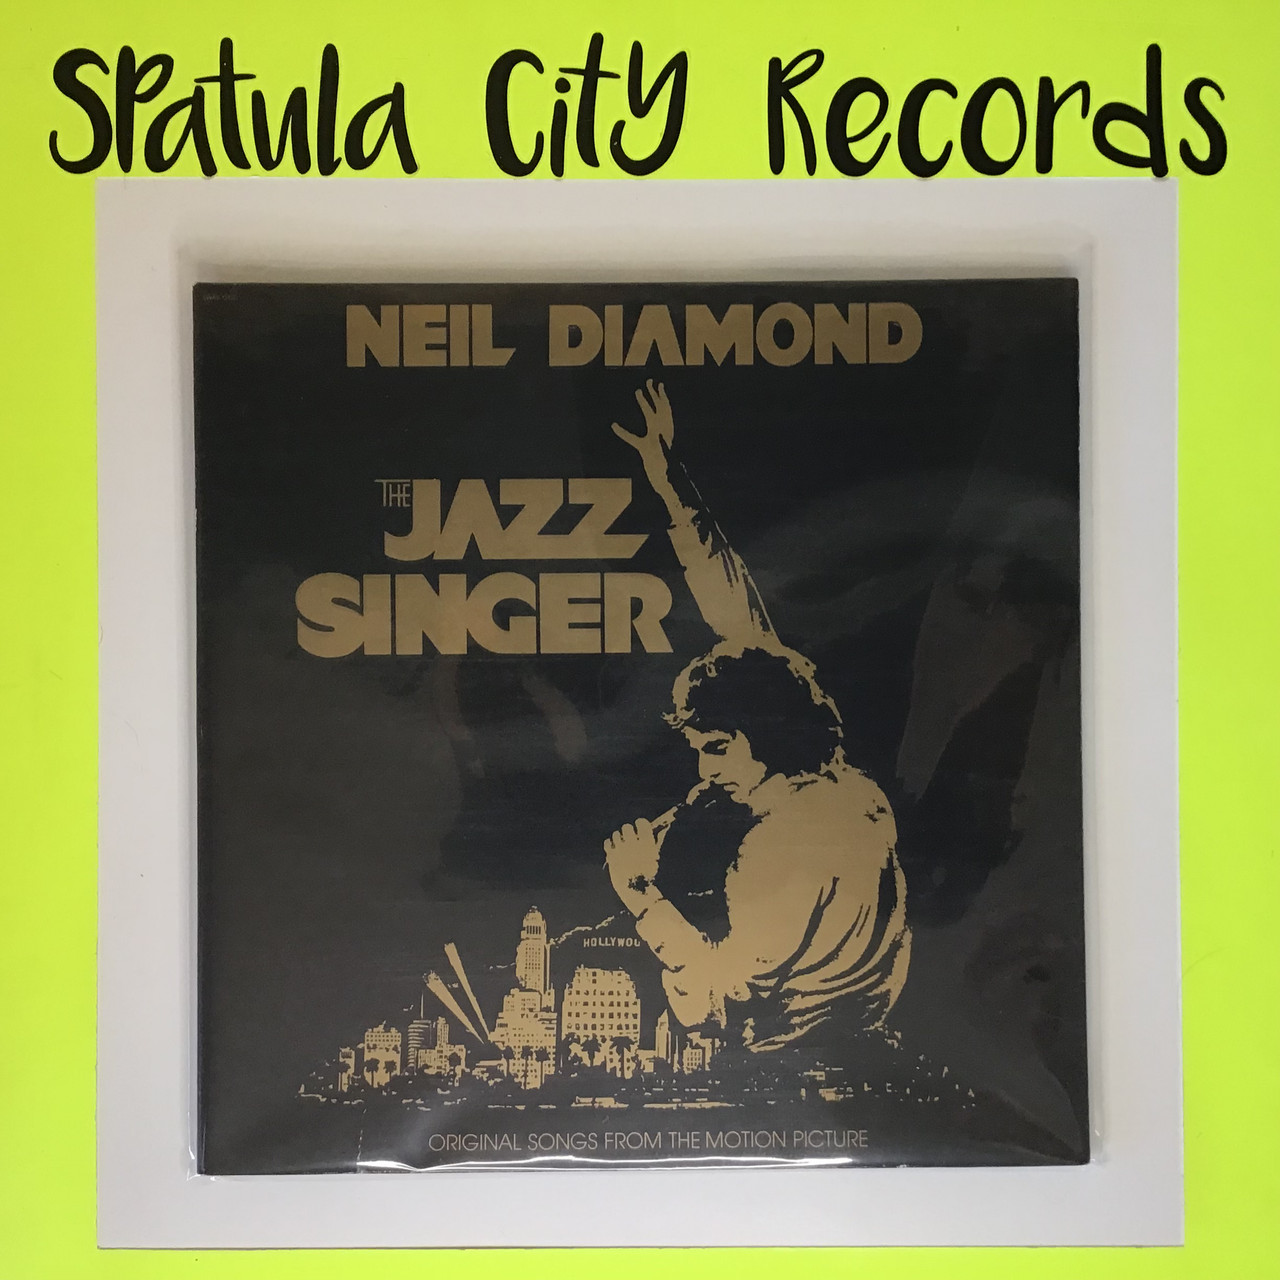 Neil Diamond - The Jazz Singer - soundtrack - vinyl record albumLP